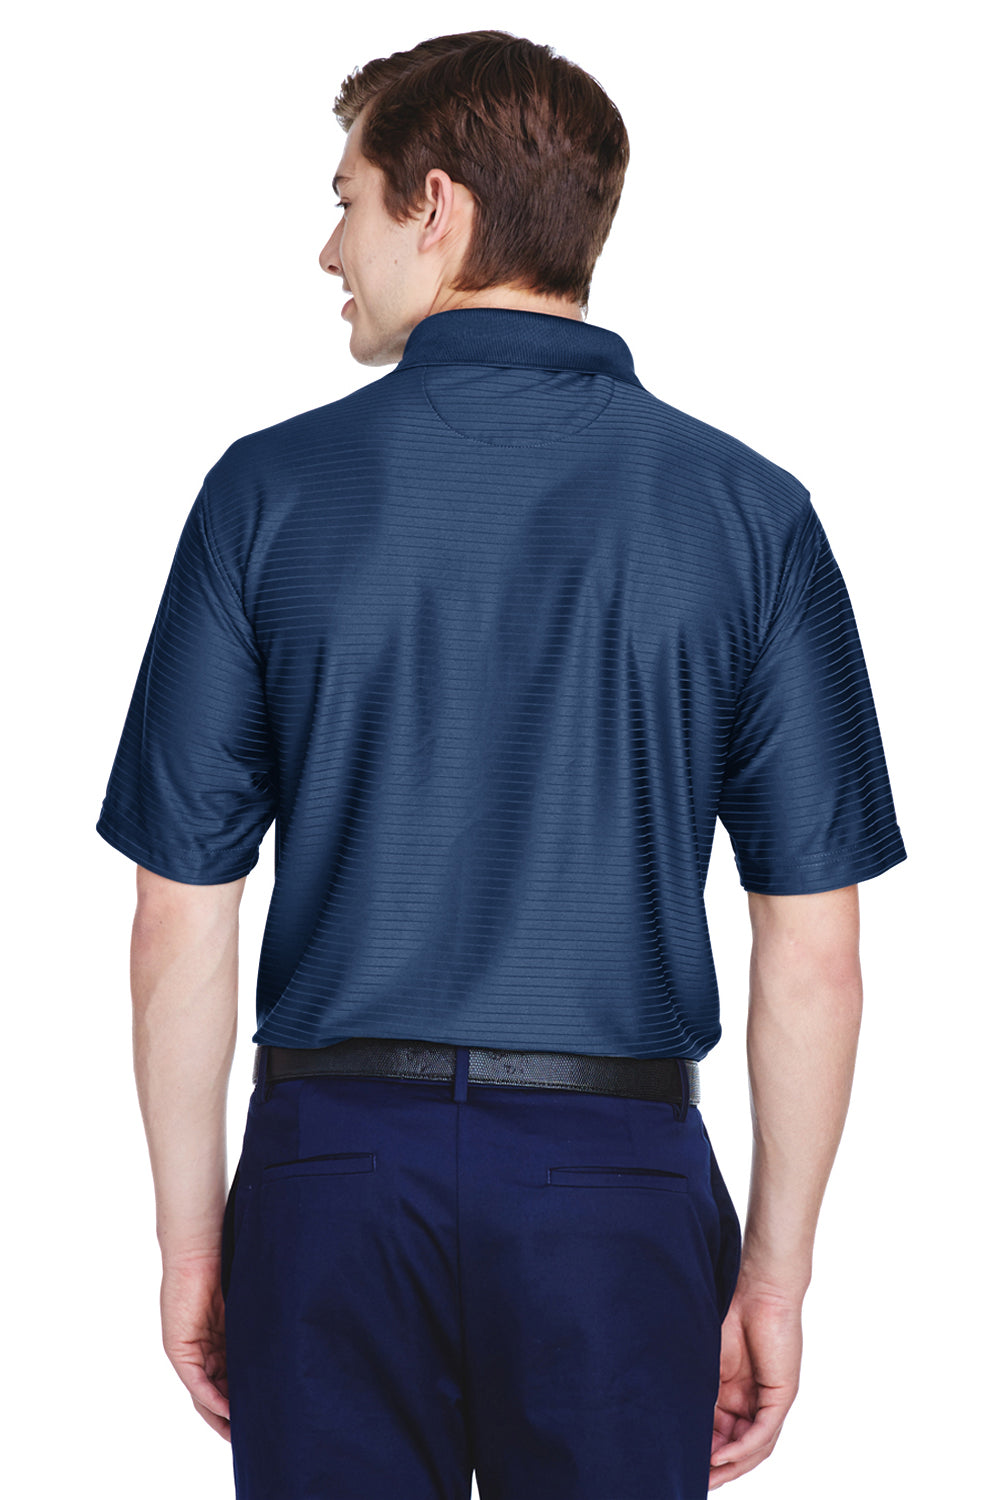 UltraClub 8413 Mens Cool & Dry Elite Performance Moisture Wicking Short Sleeve Polo Shirt Navy Blue Back